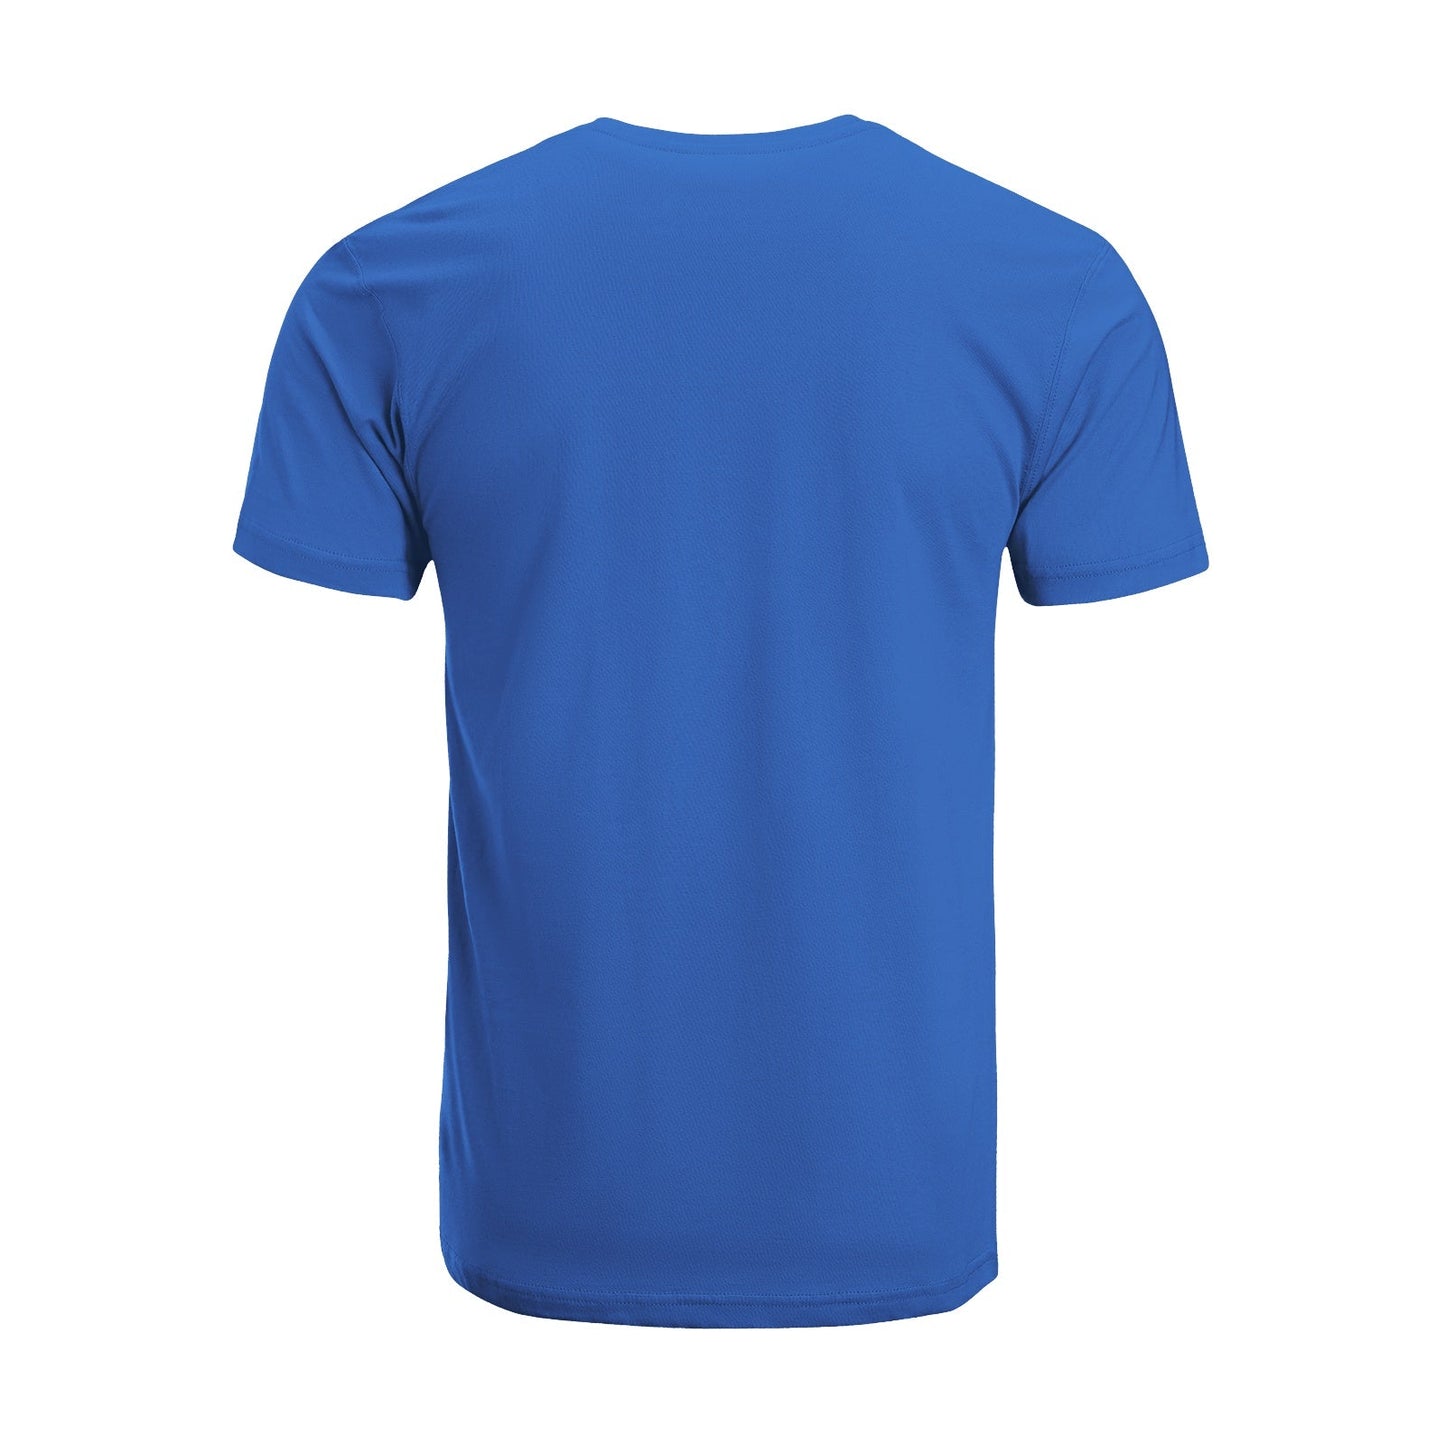 Unisex Short Sleeve Crew Neck Cotton Jersey T-Shirt VEGAN 07